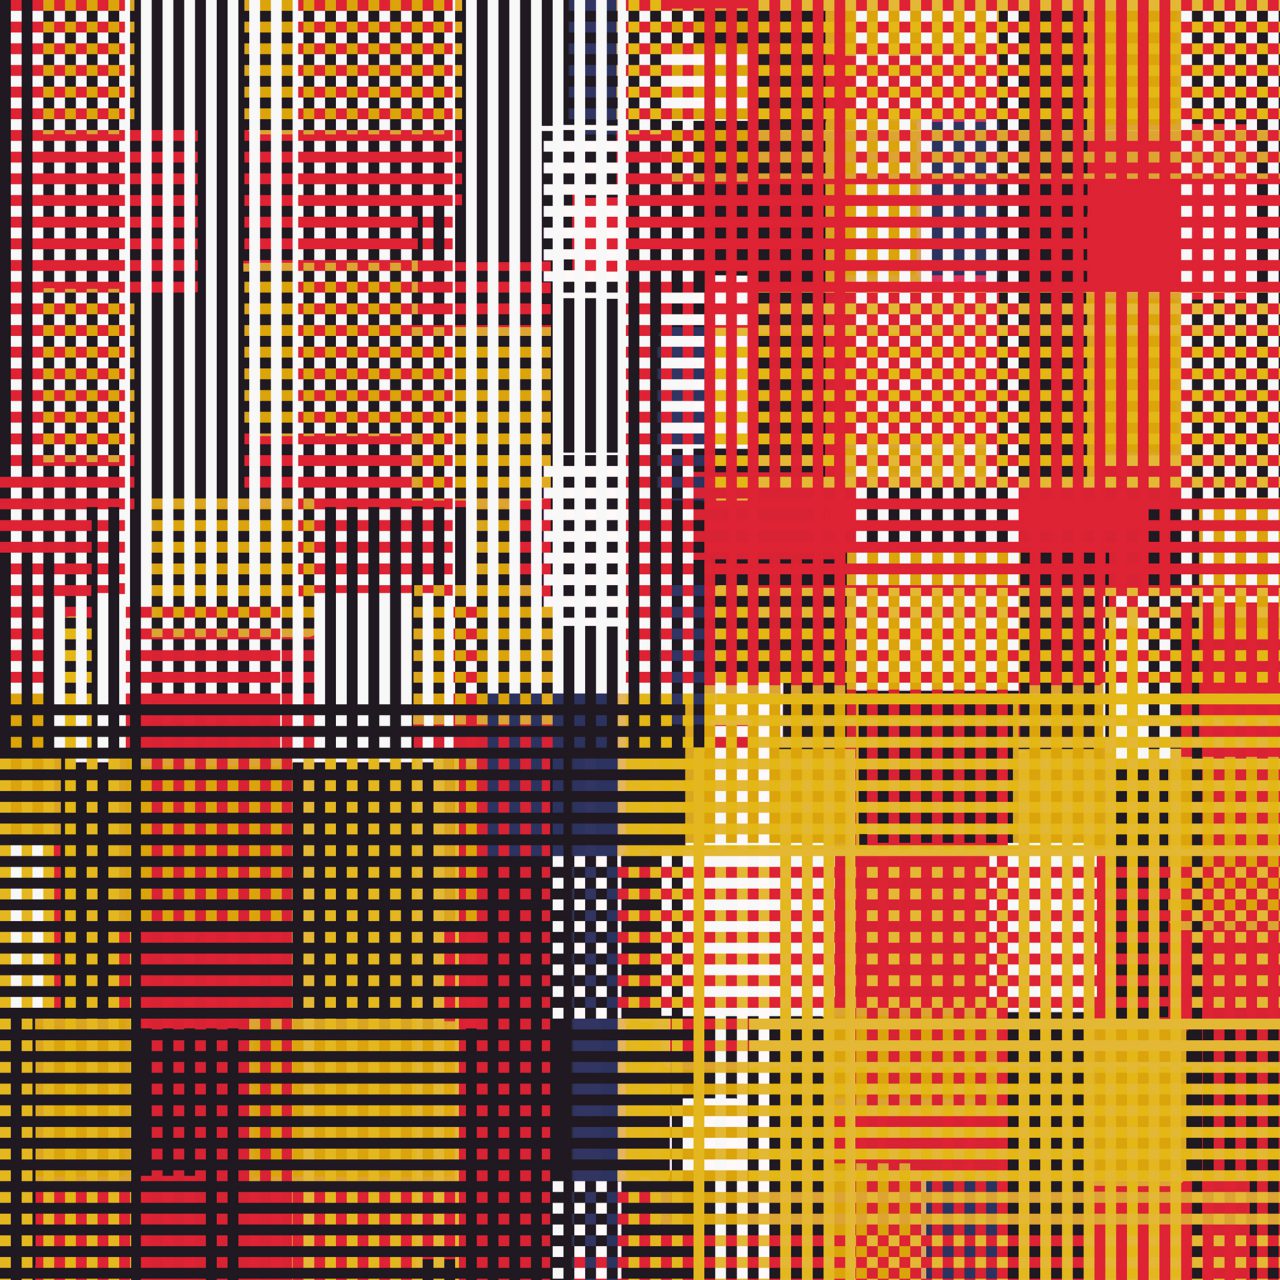 Referenz Mondrian, 2019, Experimental Fine Art Phtography, Mixed Media, 120 cm x 120 cm, Farbpigment auf Aludibond, matt 